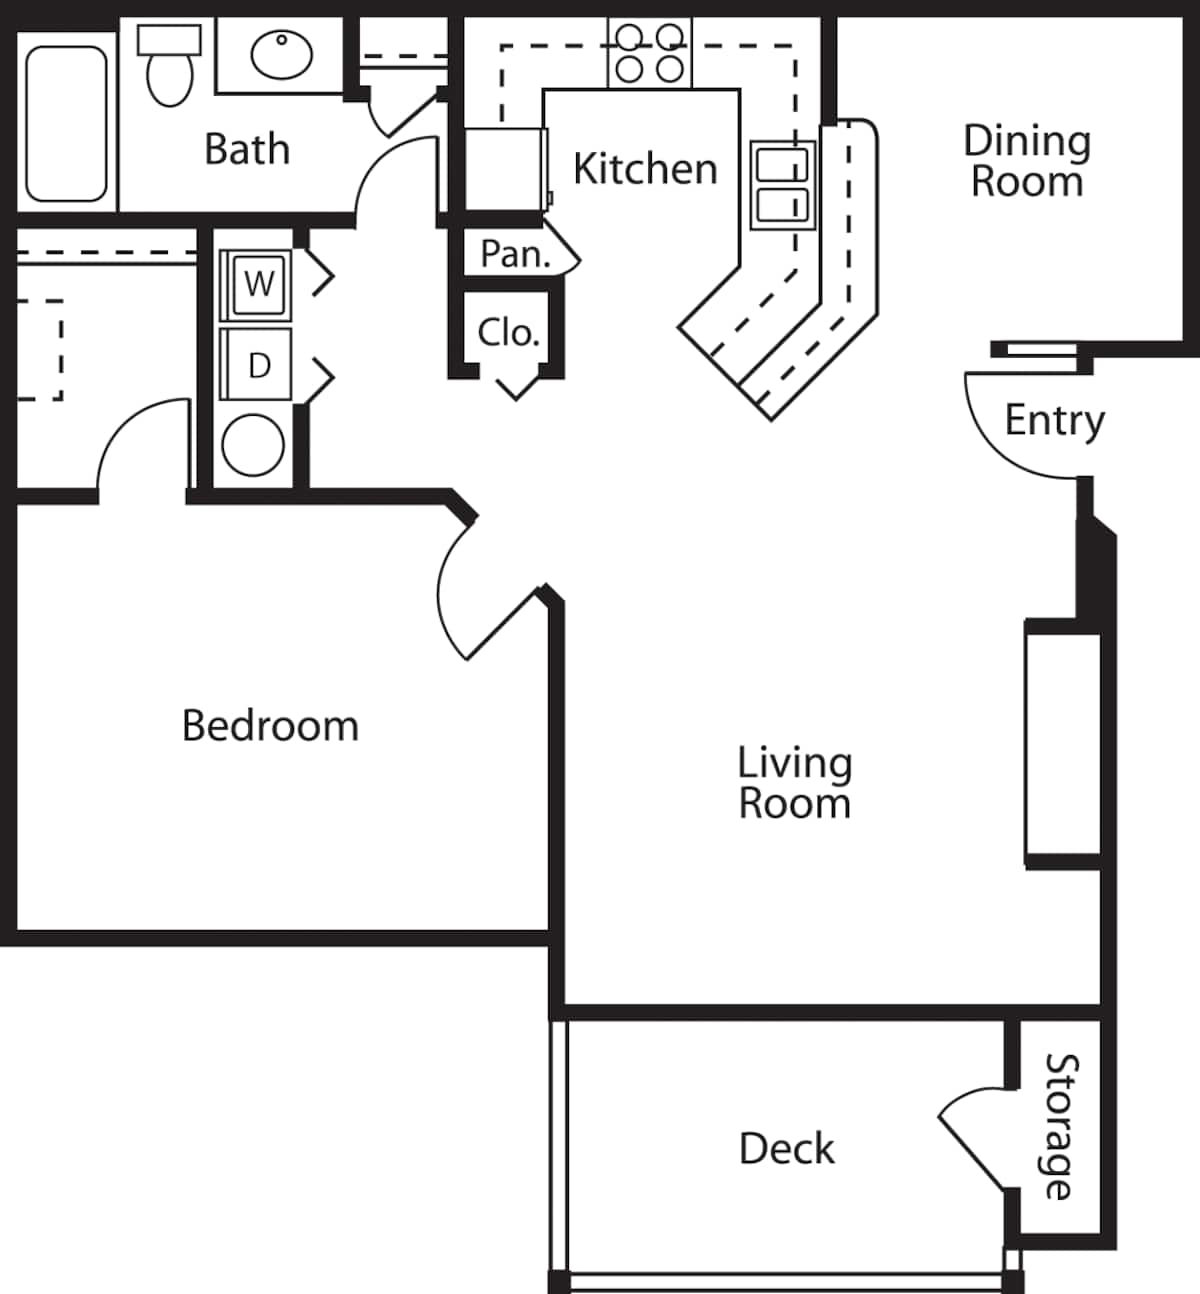 Floorplan diagram for Brook, showing 1 bedroom